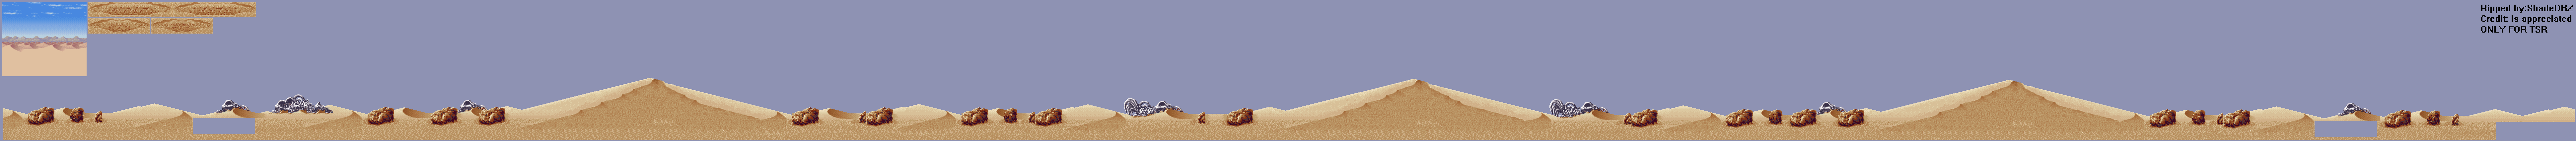 Super Star Wars - Level 01 - Dune Sea